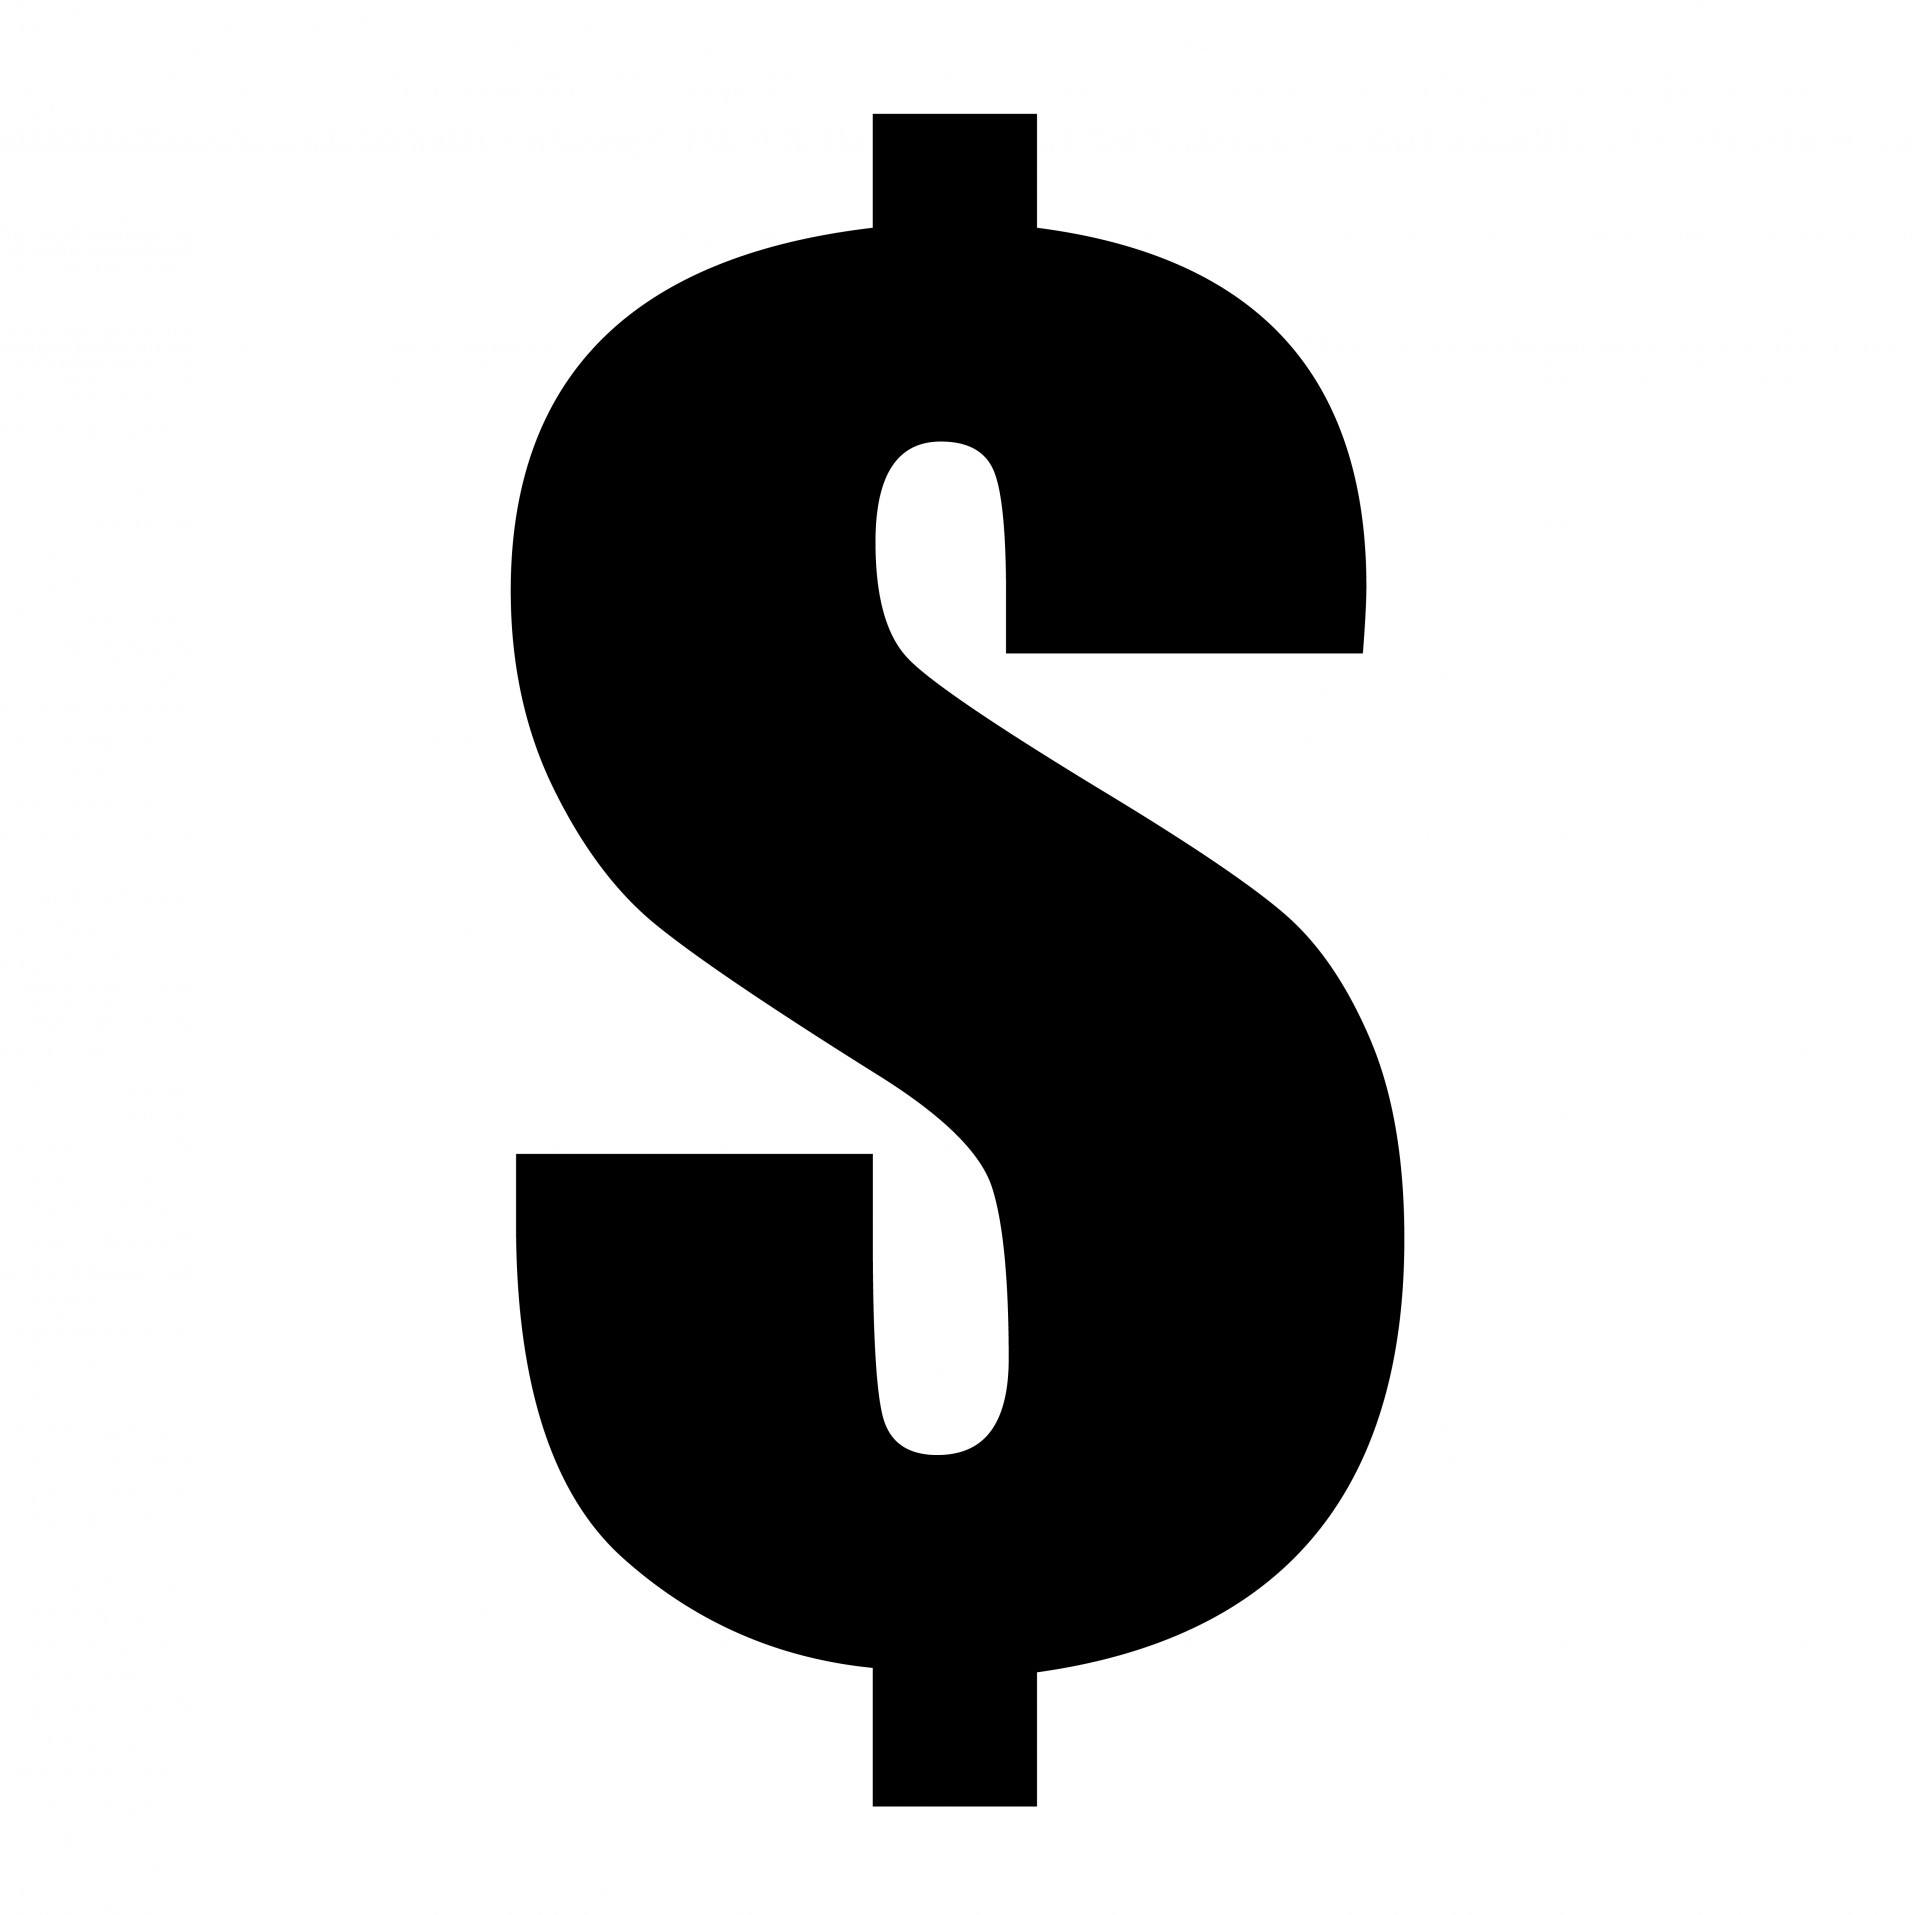 Dollar sign photo